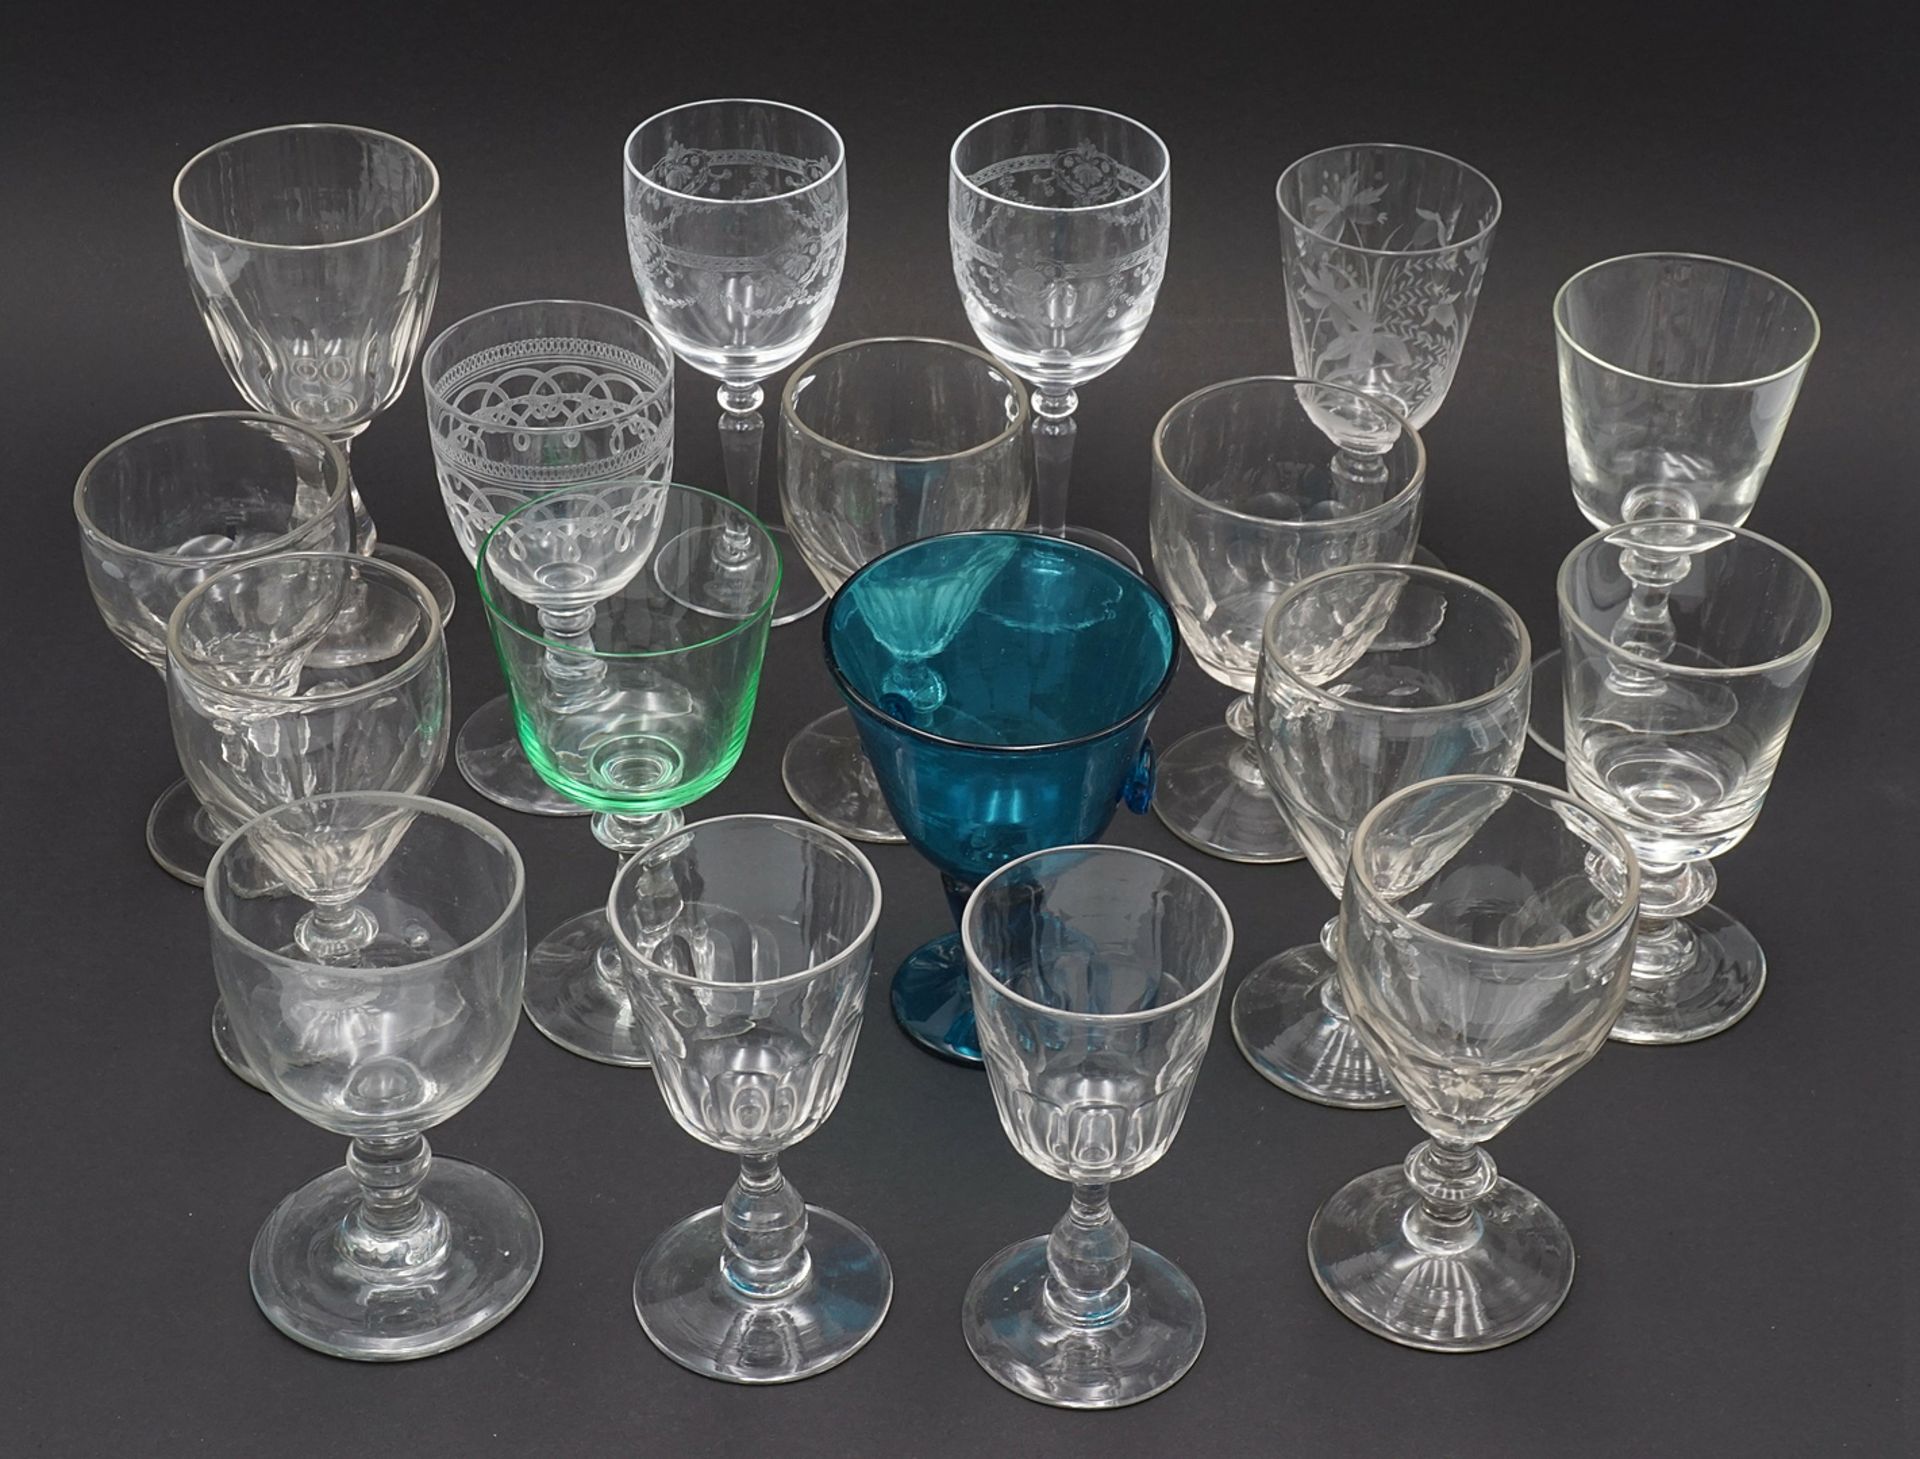 18 wine glasses, around 1900